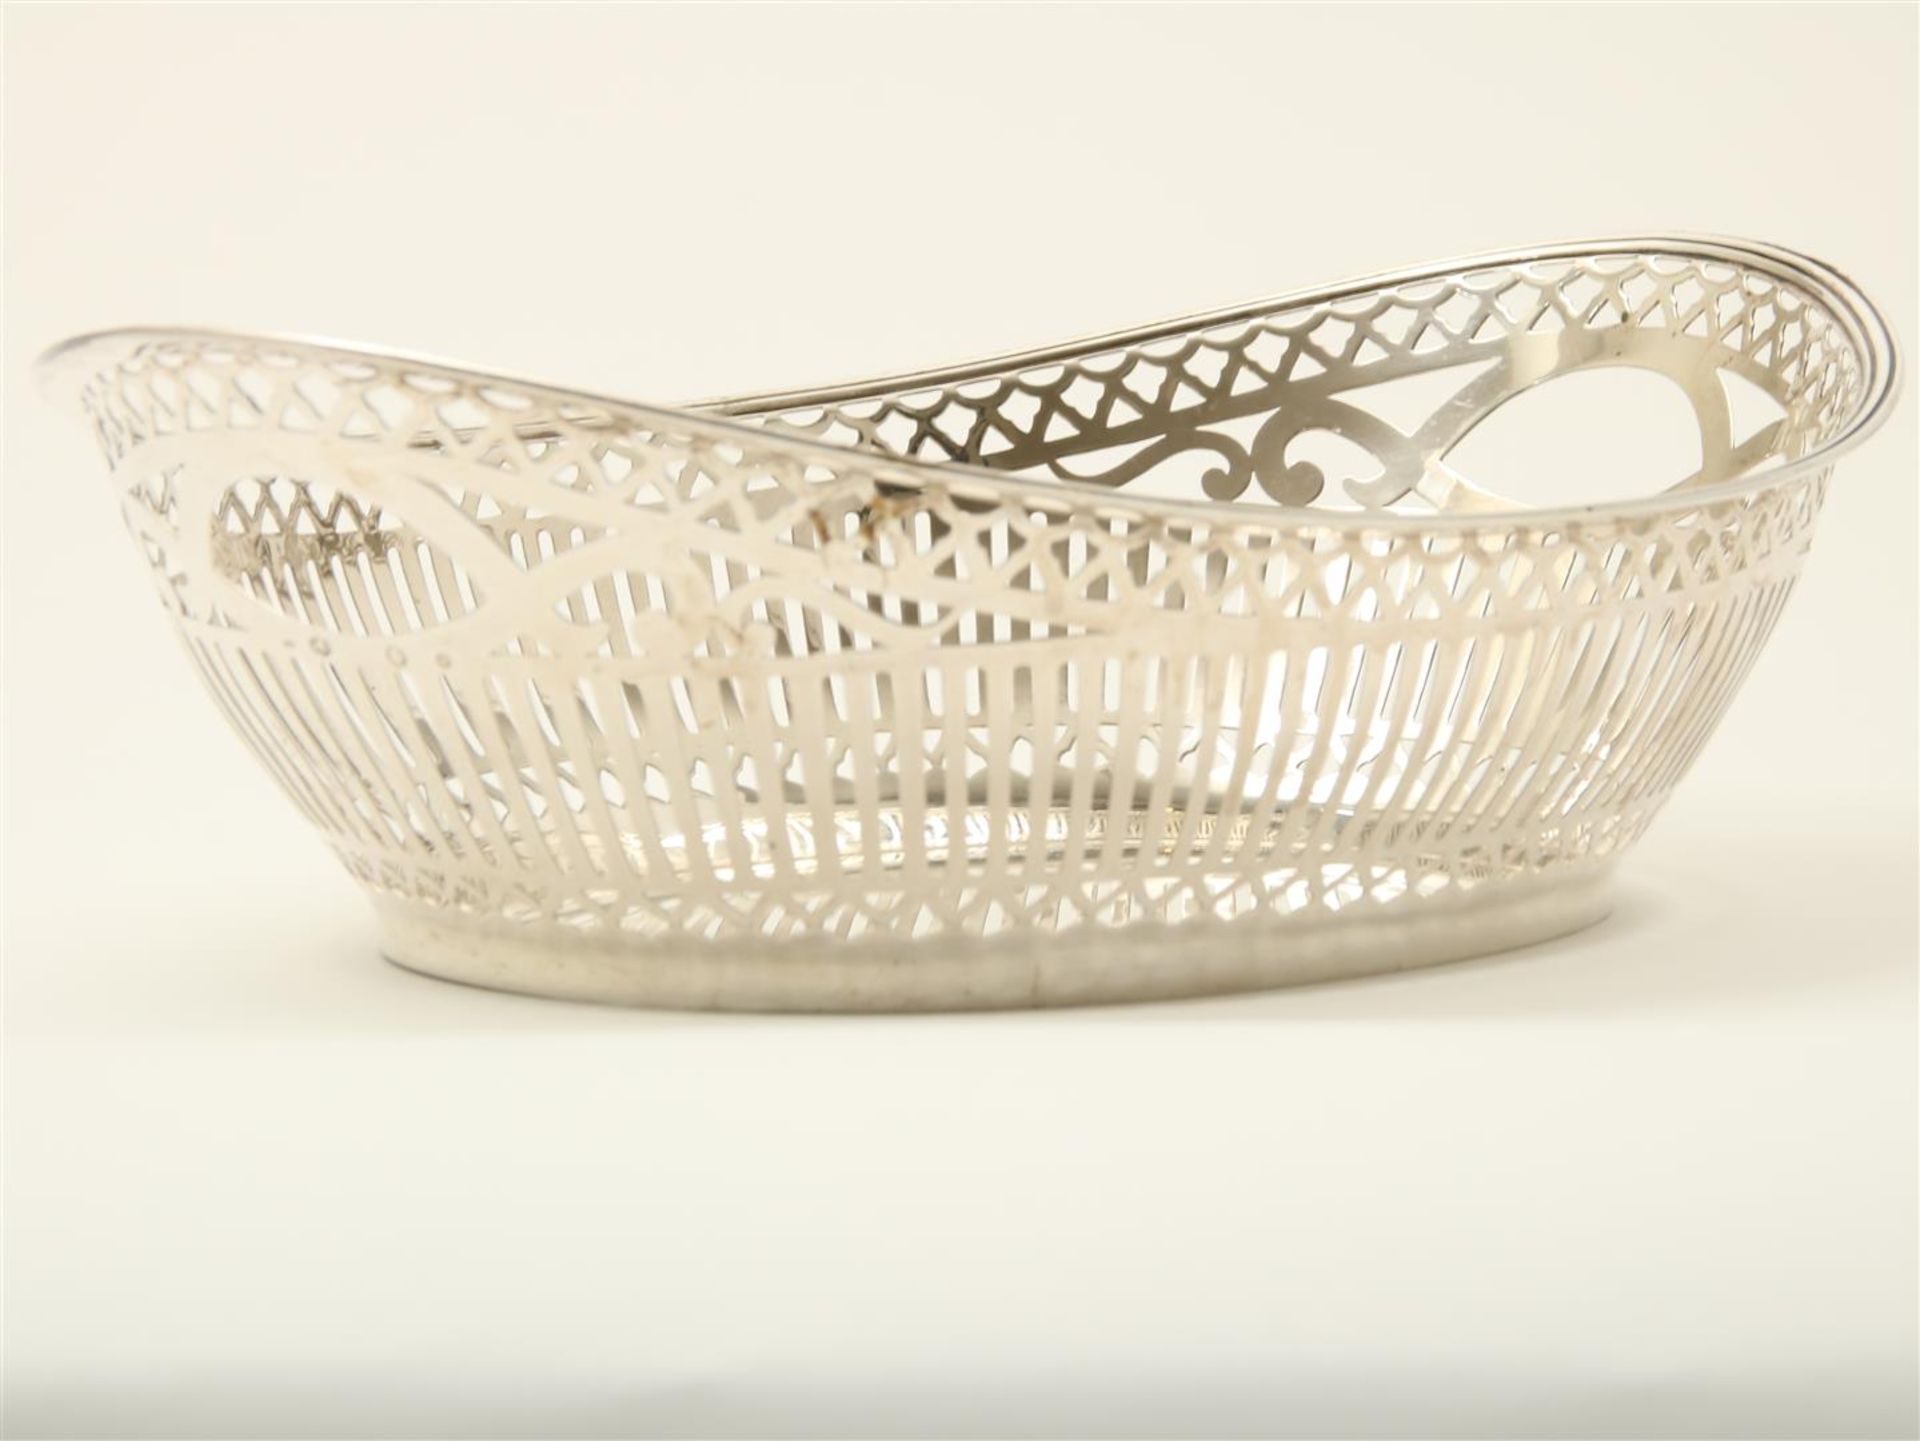 Openwork silver bread basket with bar motif, grade 835/000, maker's mark: "APz3", Fa. A. Pressburg & - Image 2 of 4